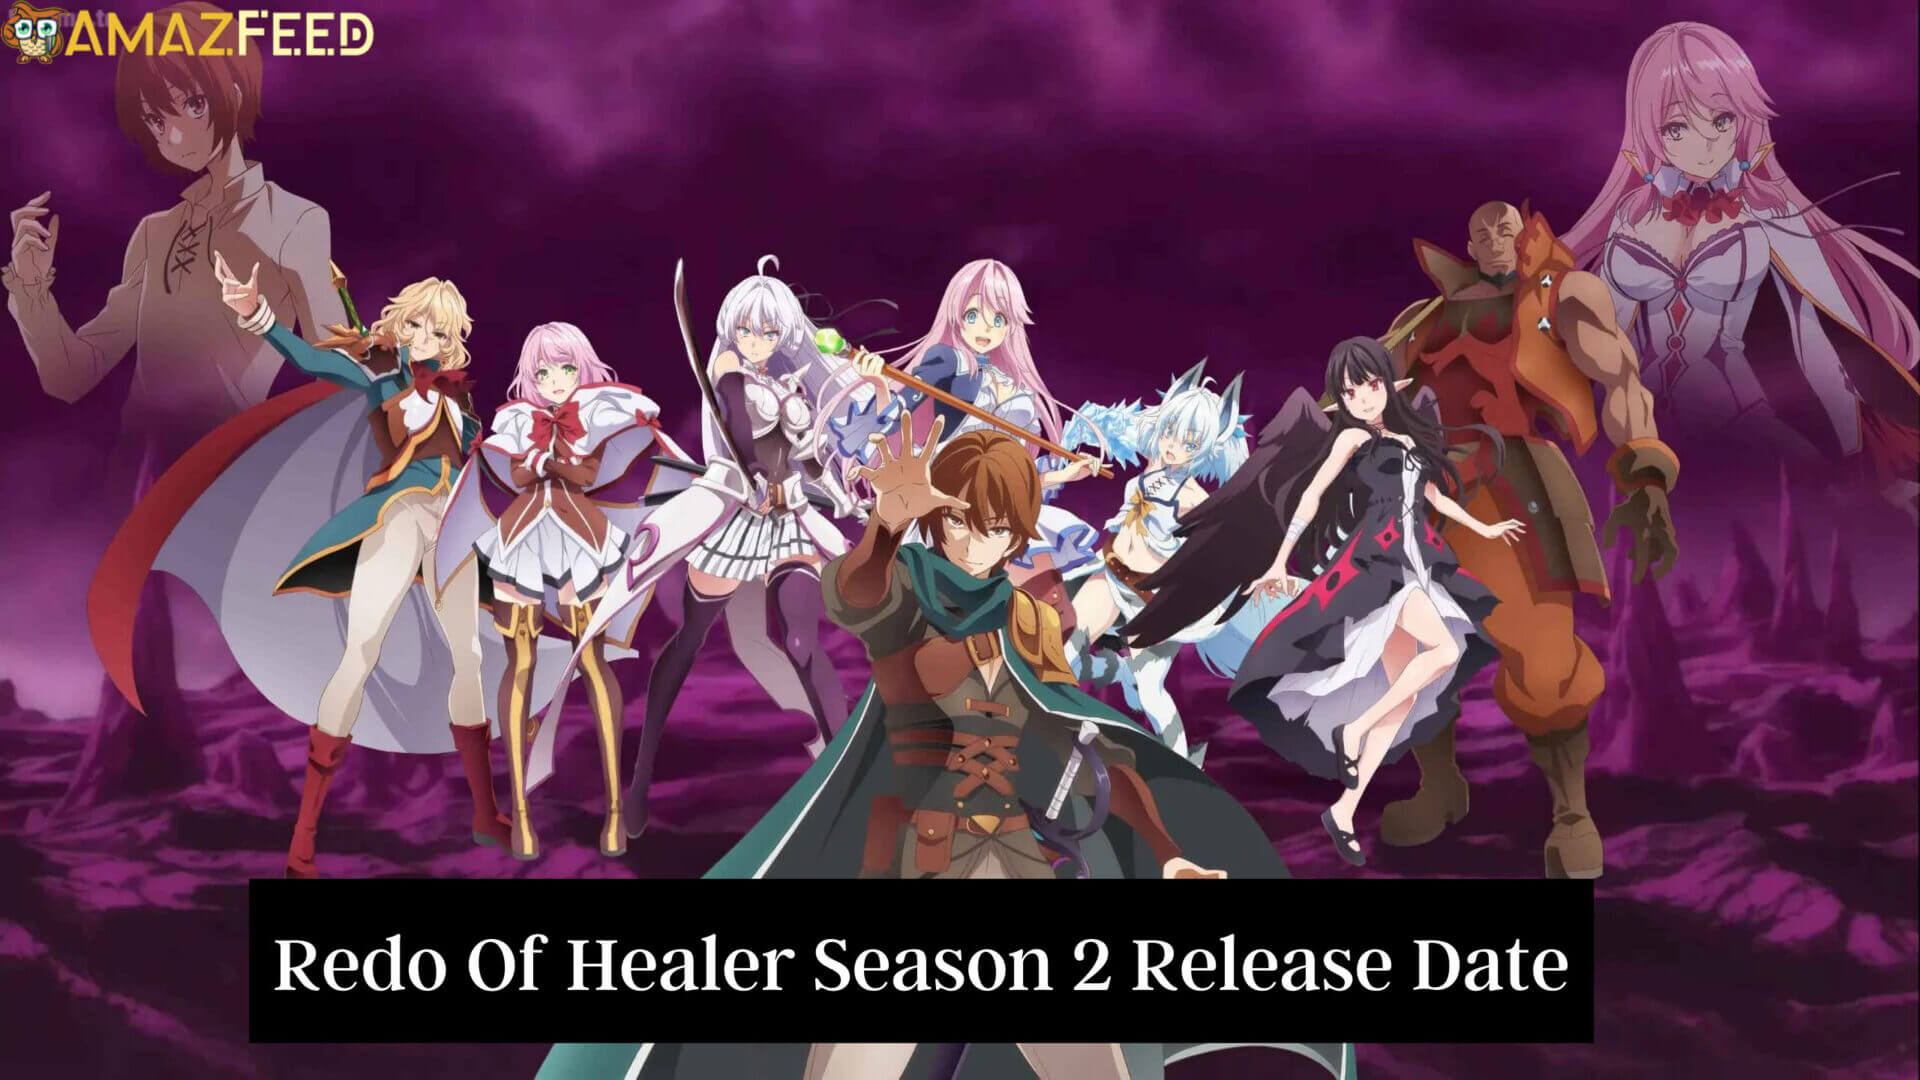 When will be Redo of Healer Season 2 Released? [Latest Updates]